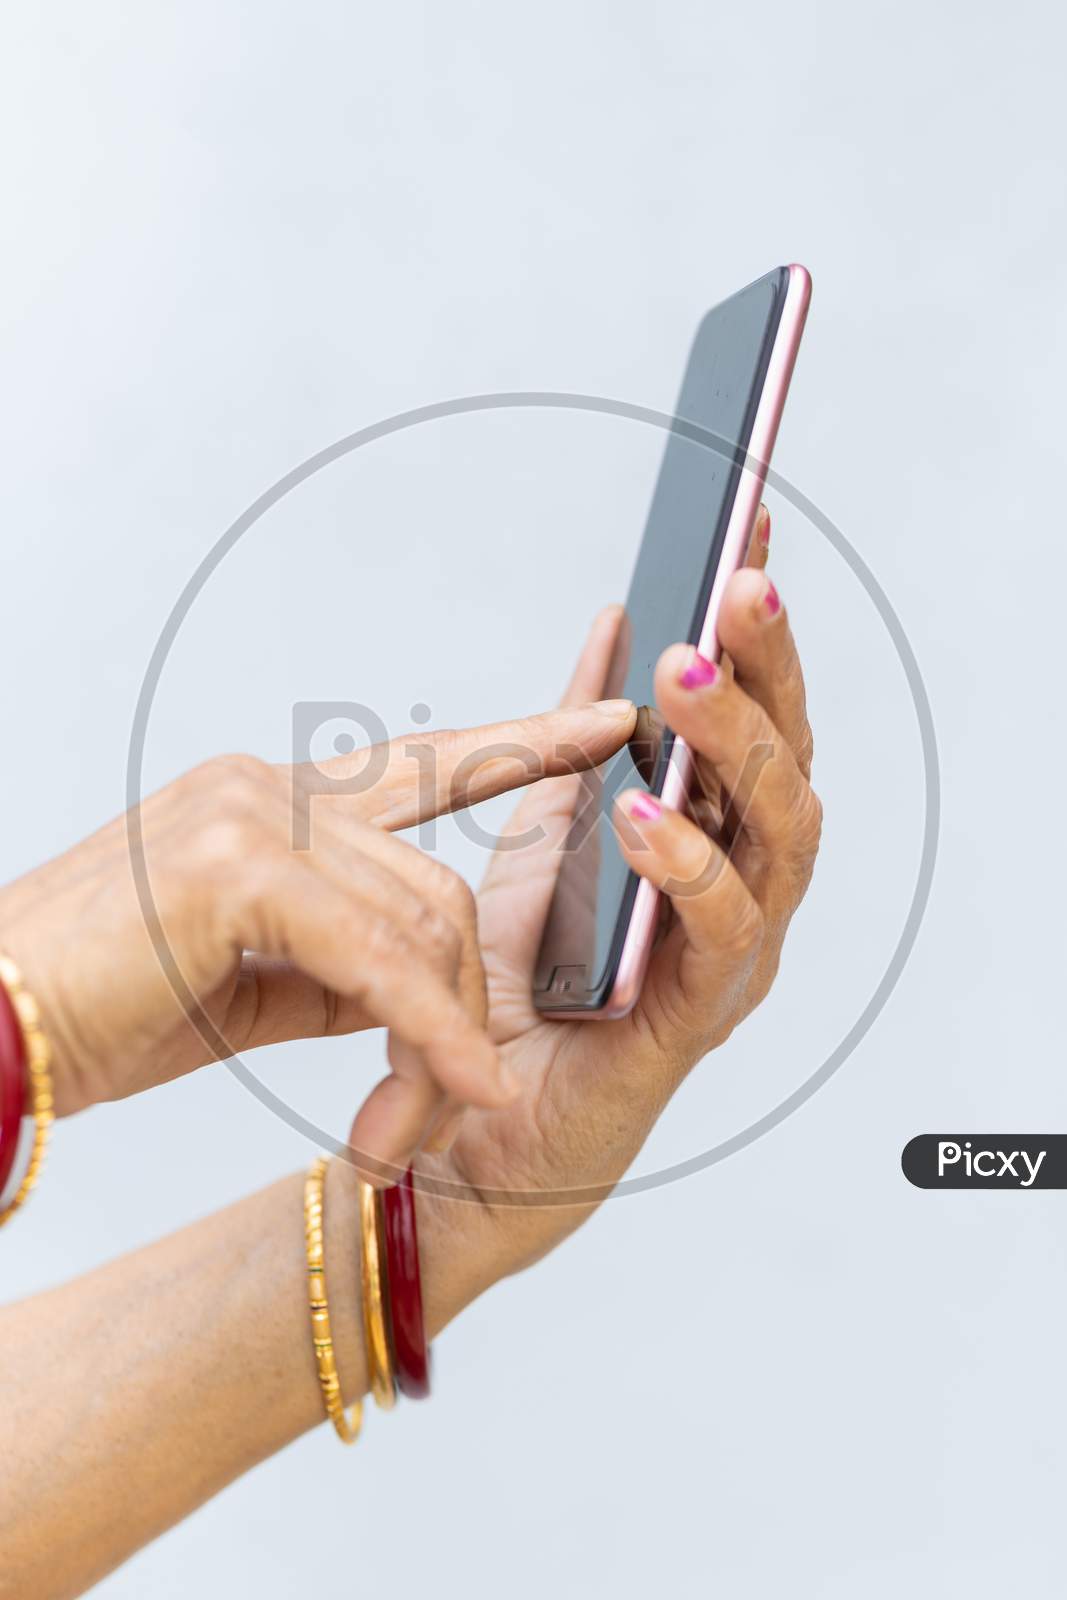 Senior Woman Hand Using Mobile Phone Against Plain Background